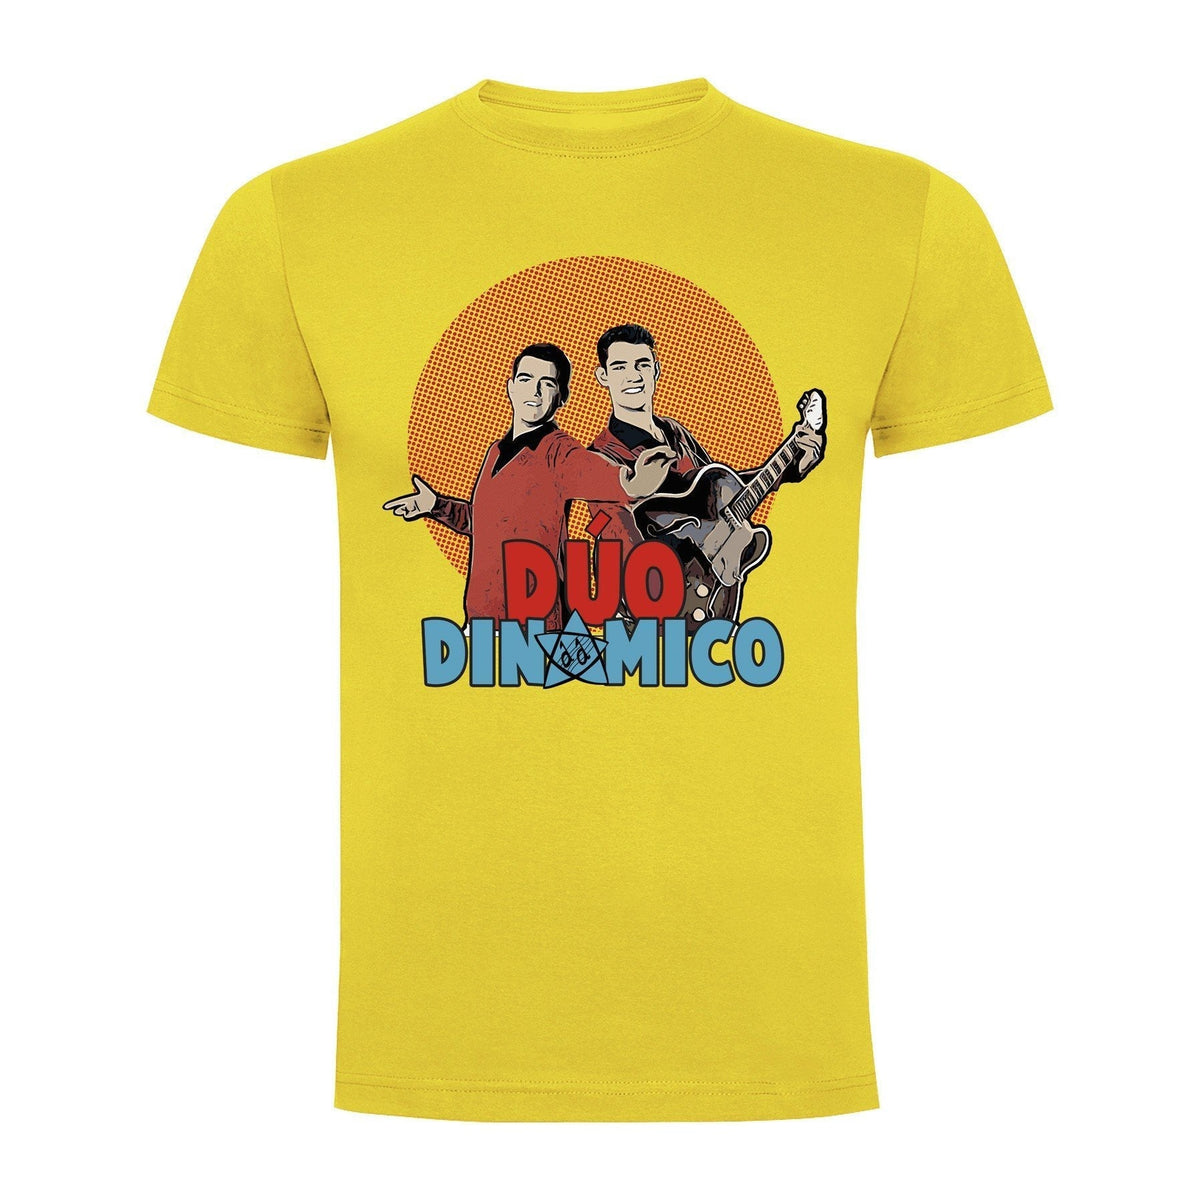 El Dúo Dinámico - Camiseta chico "Dúo Dinámico" - D2fy · Rocktud - Duo Dinámico